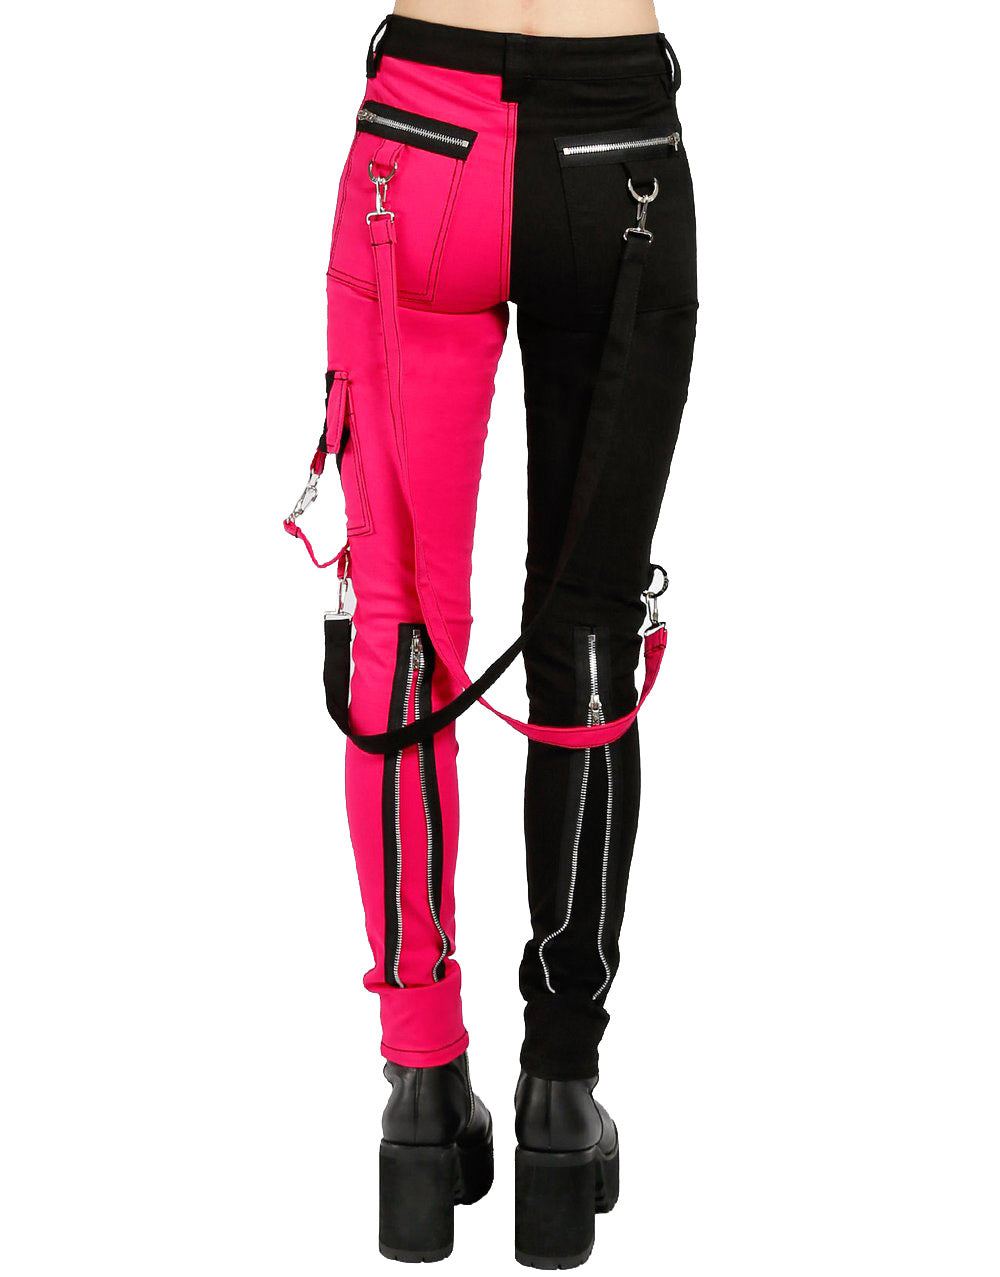 Tripp Ladies Split Leg Bondage Pants [Black/Pink]